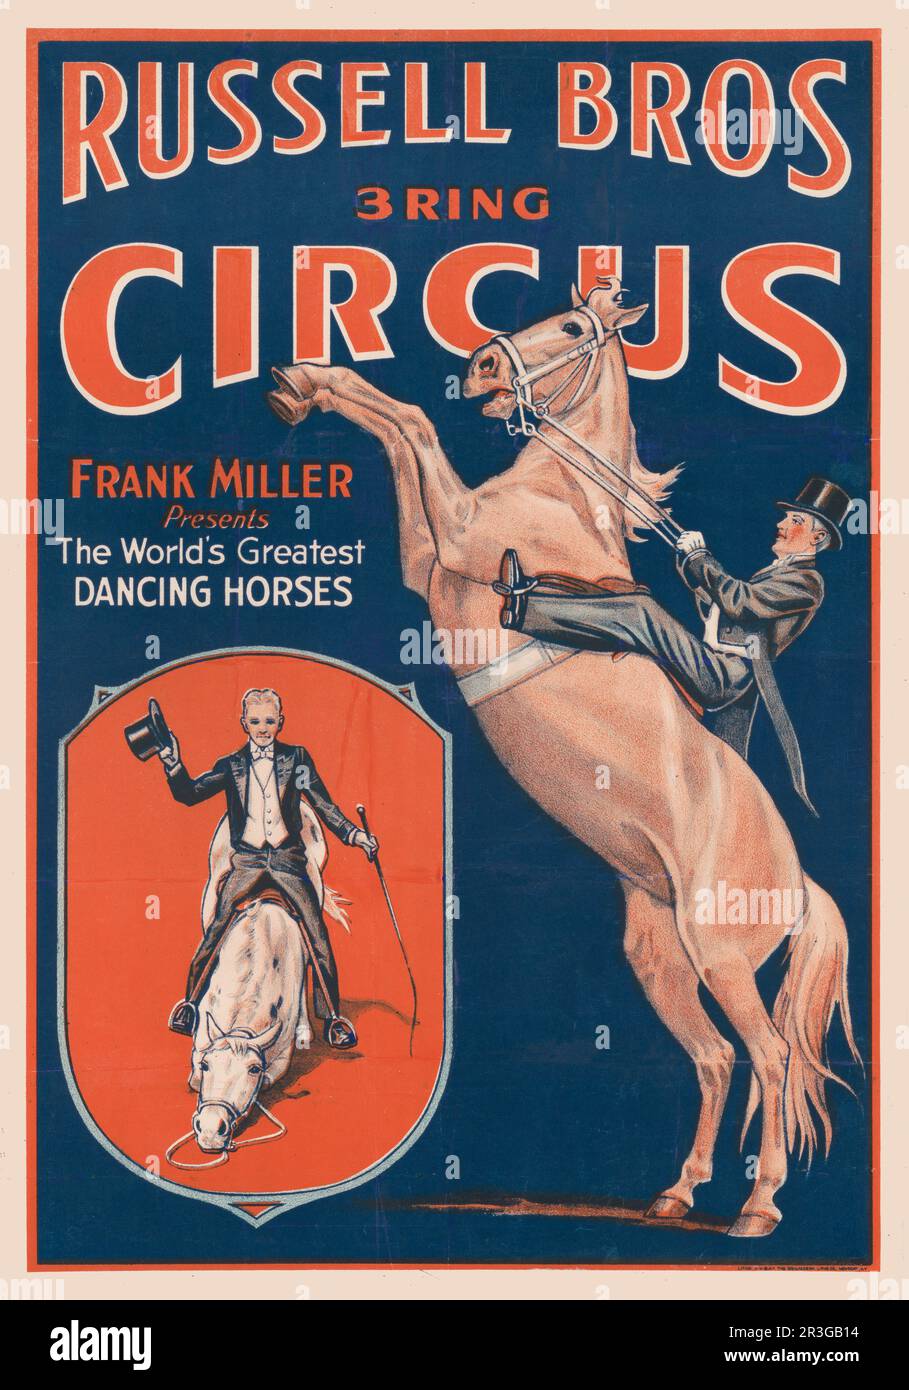 Vintage Russell Brothers Circus Poster. Frank Miller präsentiert die weltbesten tanzenden Pferde. Stockfoto